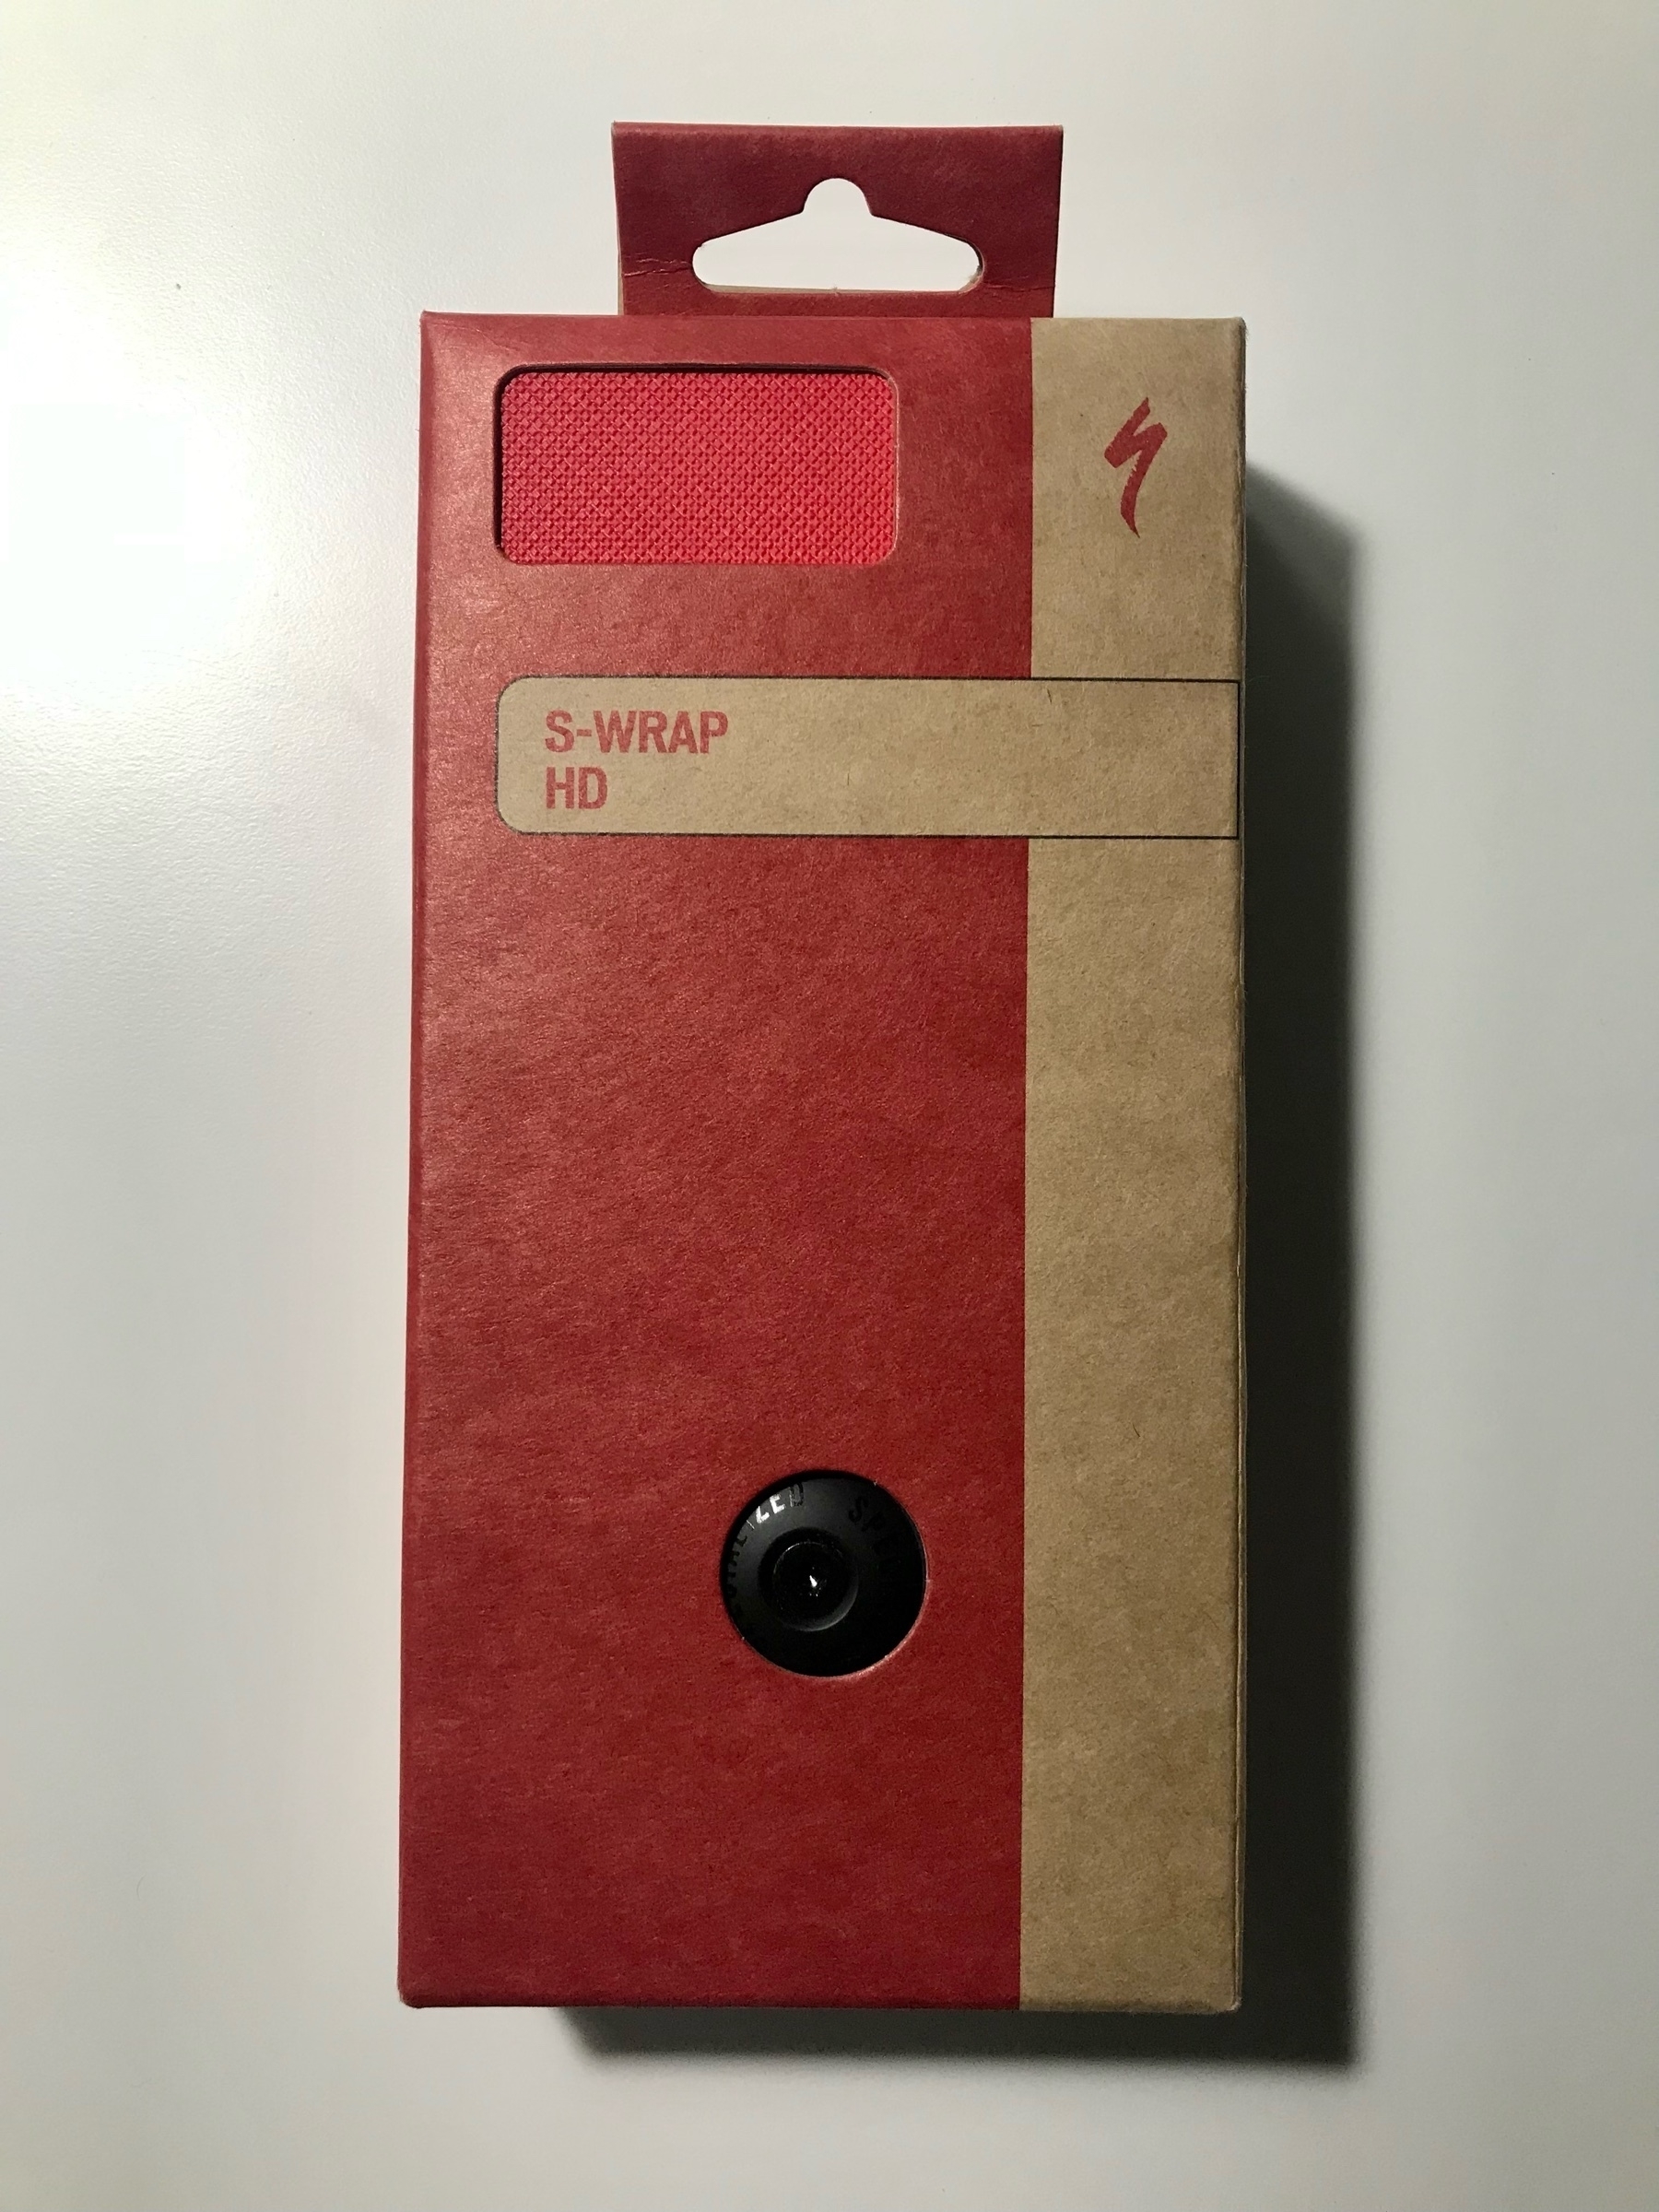 Drop bar handle bar tape rolls in red and brown cardboard packaging.